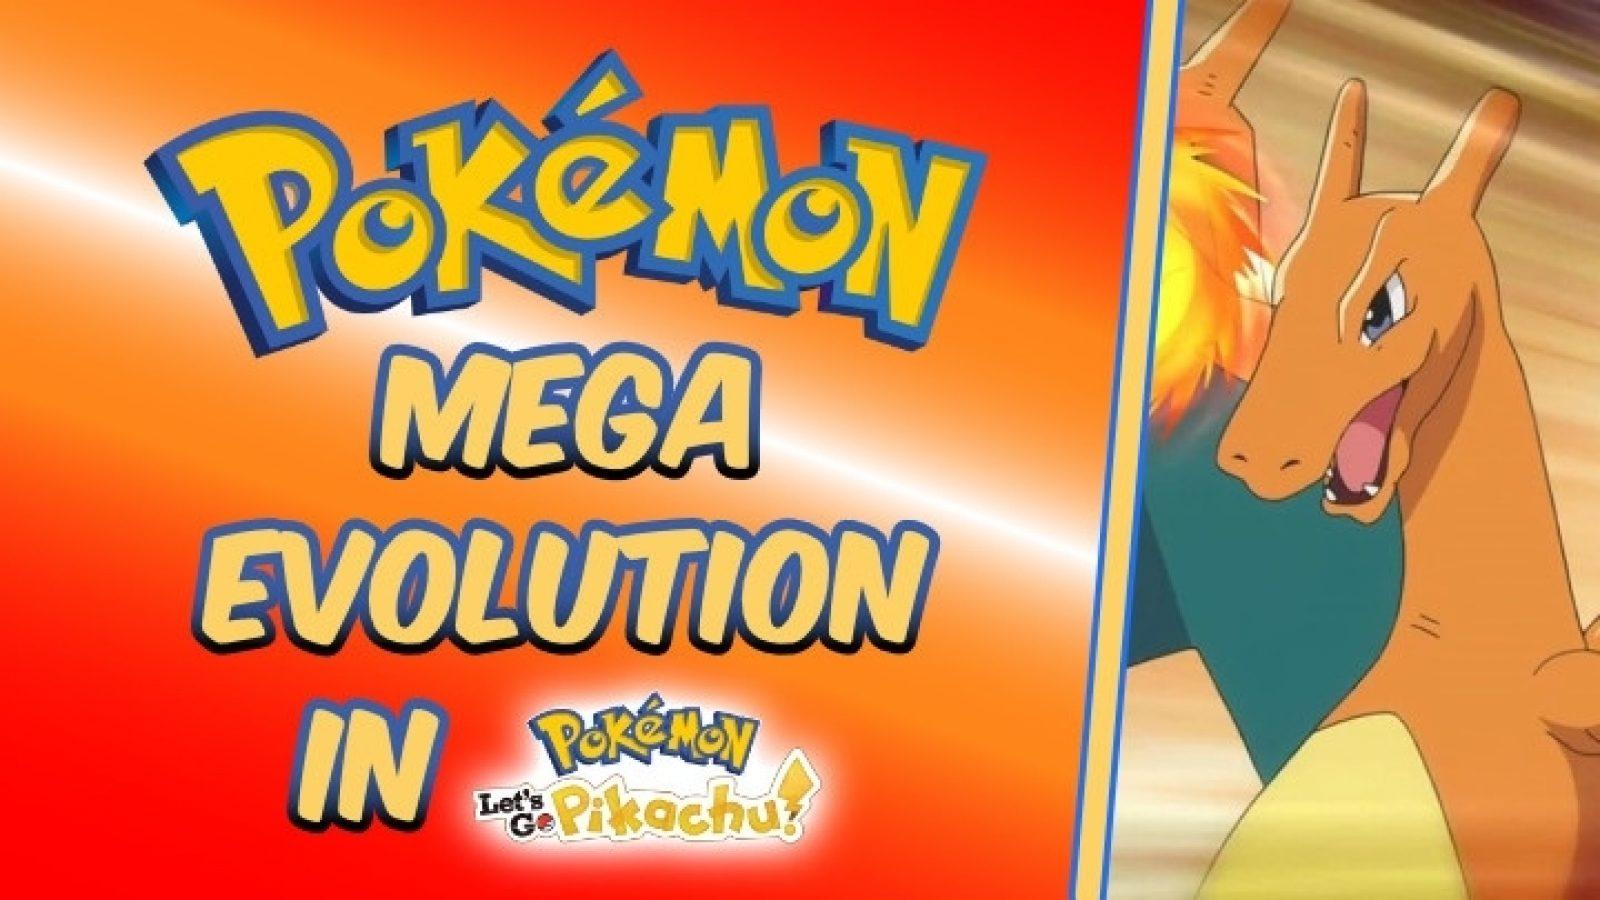 Pokemon Let's Go Mega Evolution